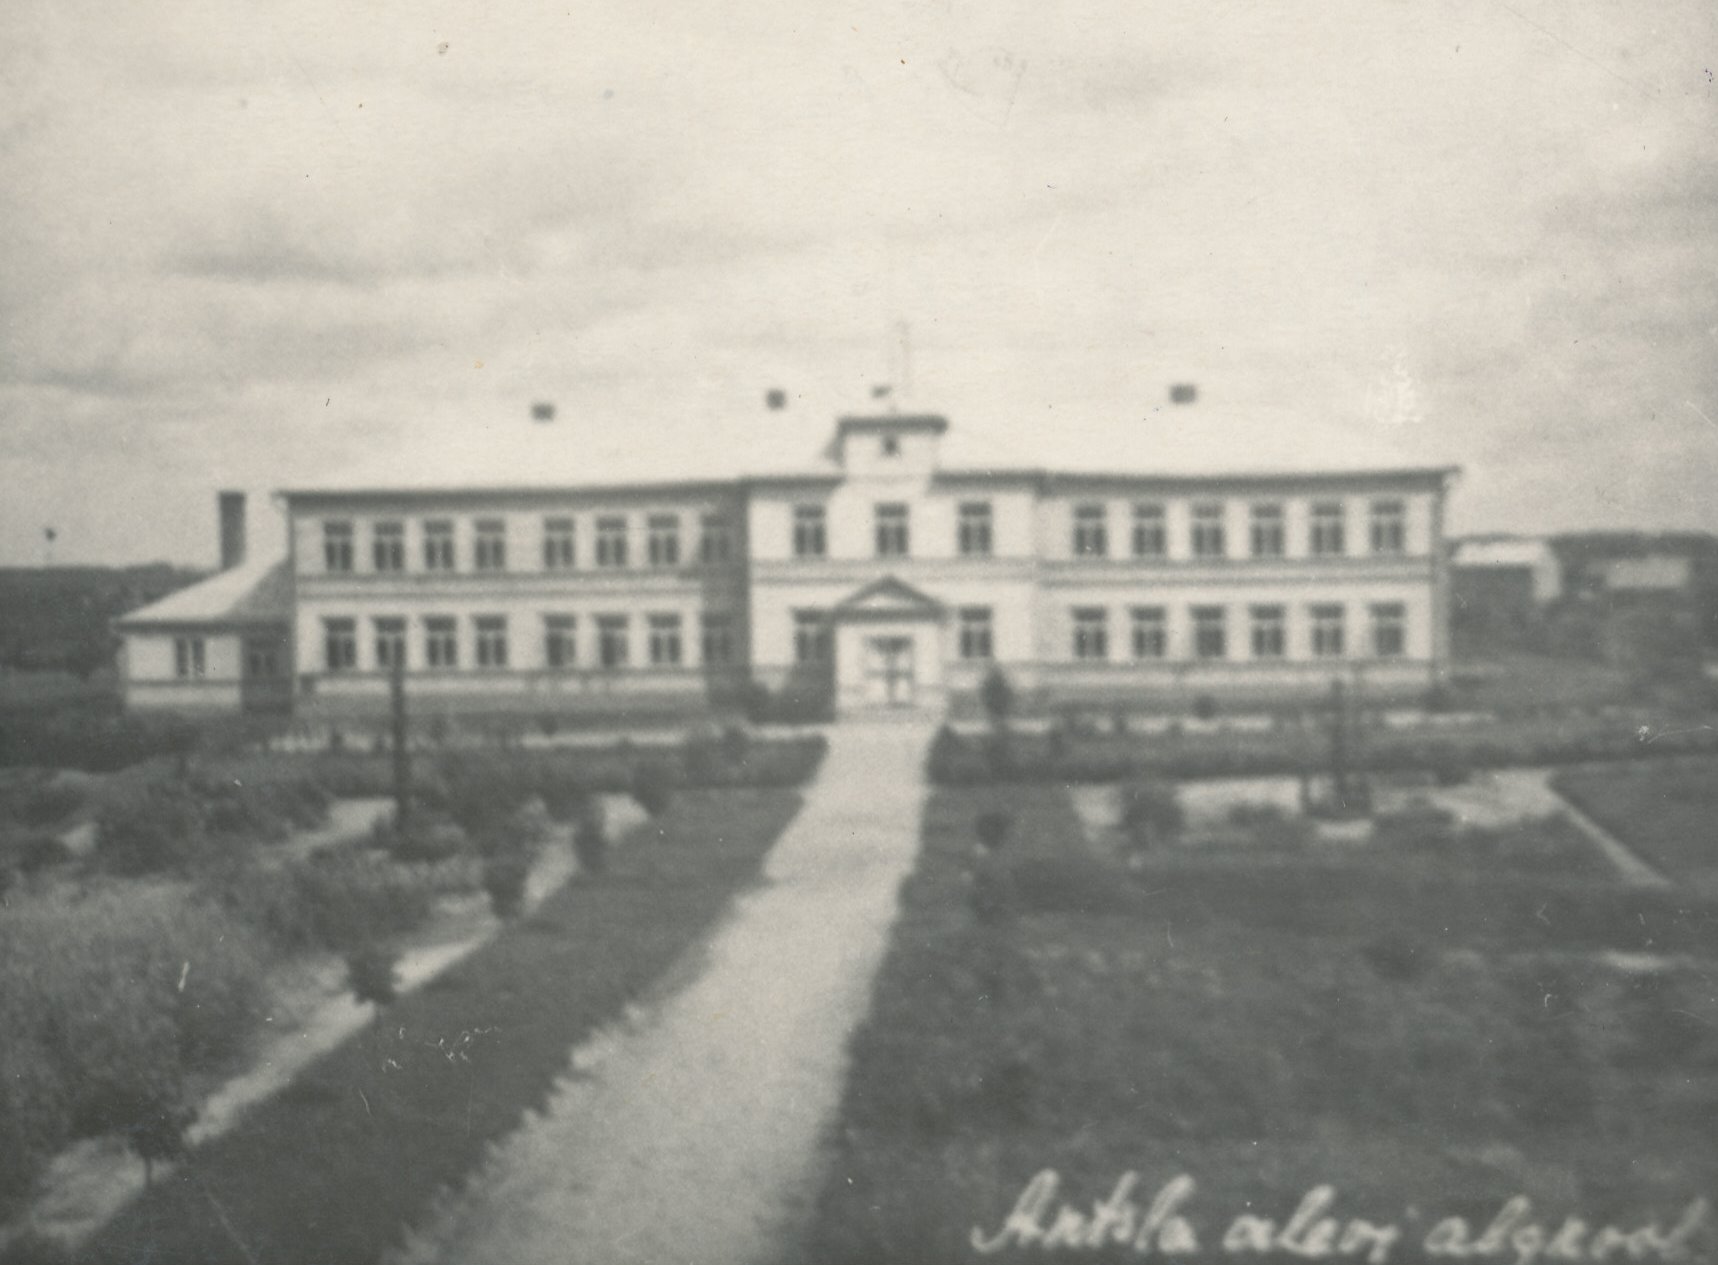 Photo. Antsla alevi primary school building from the 1930s.